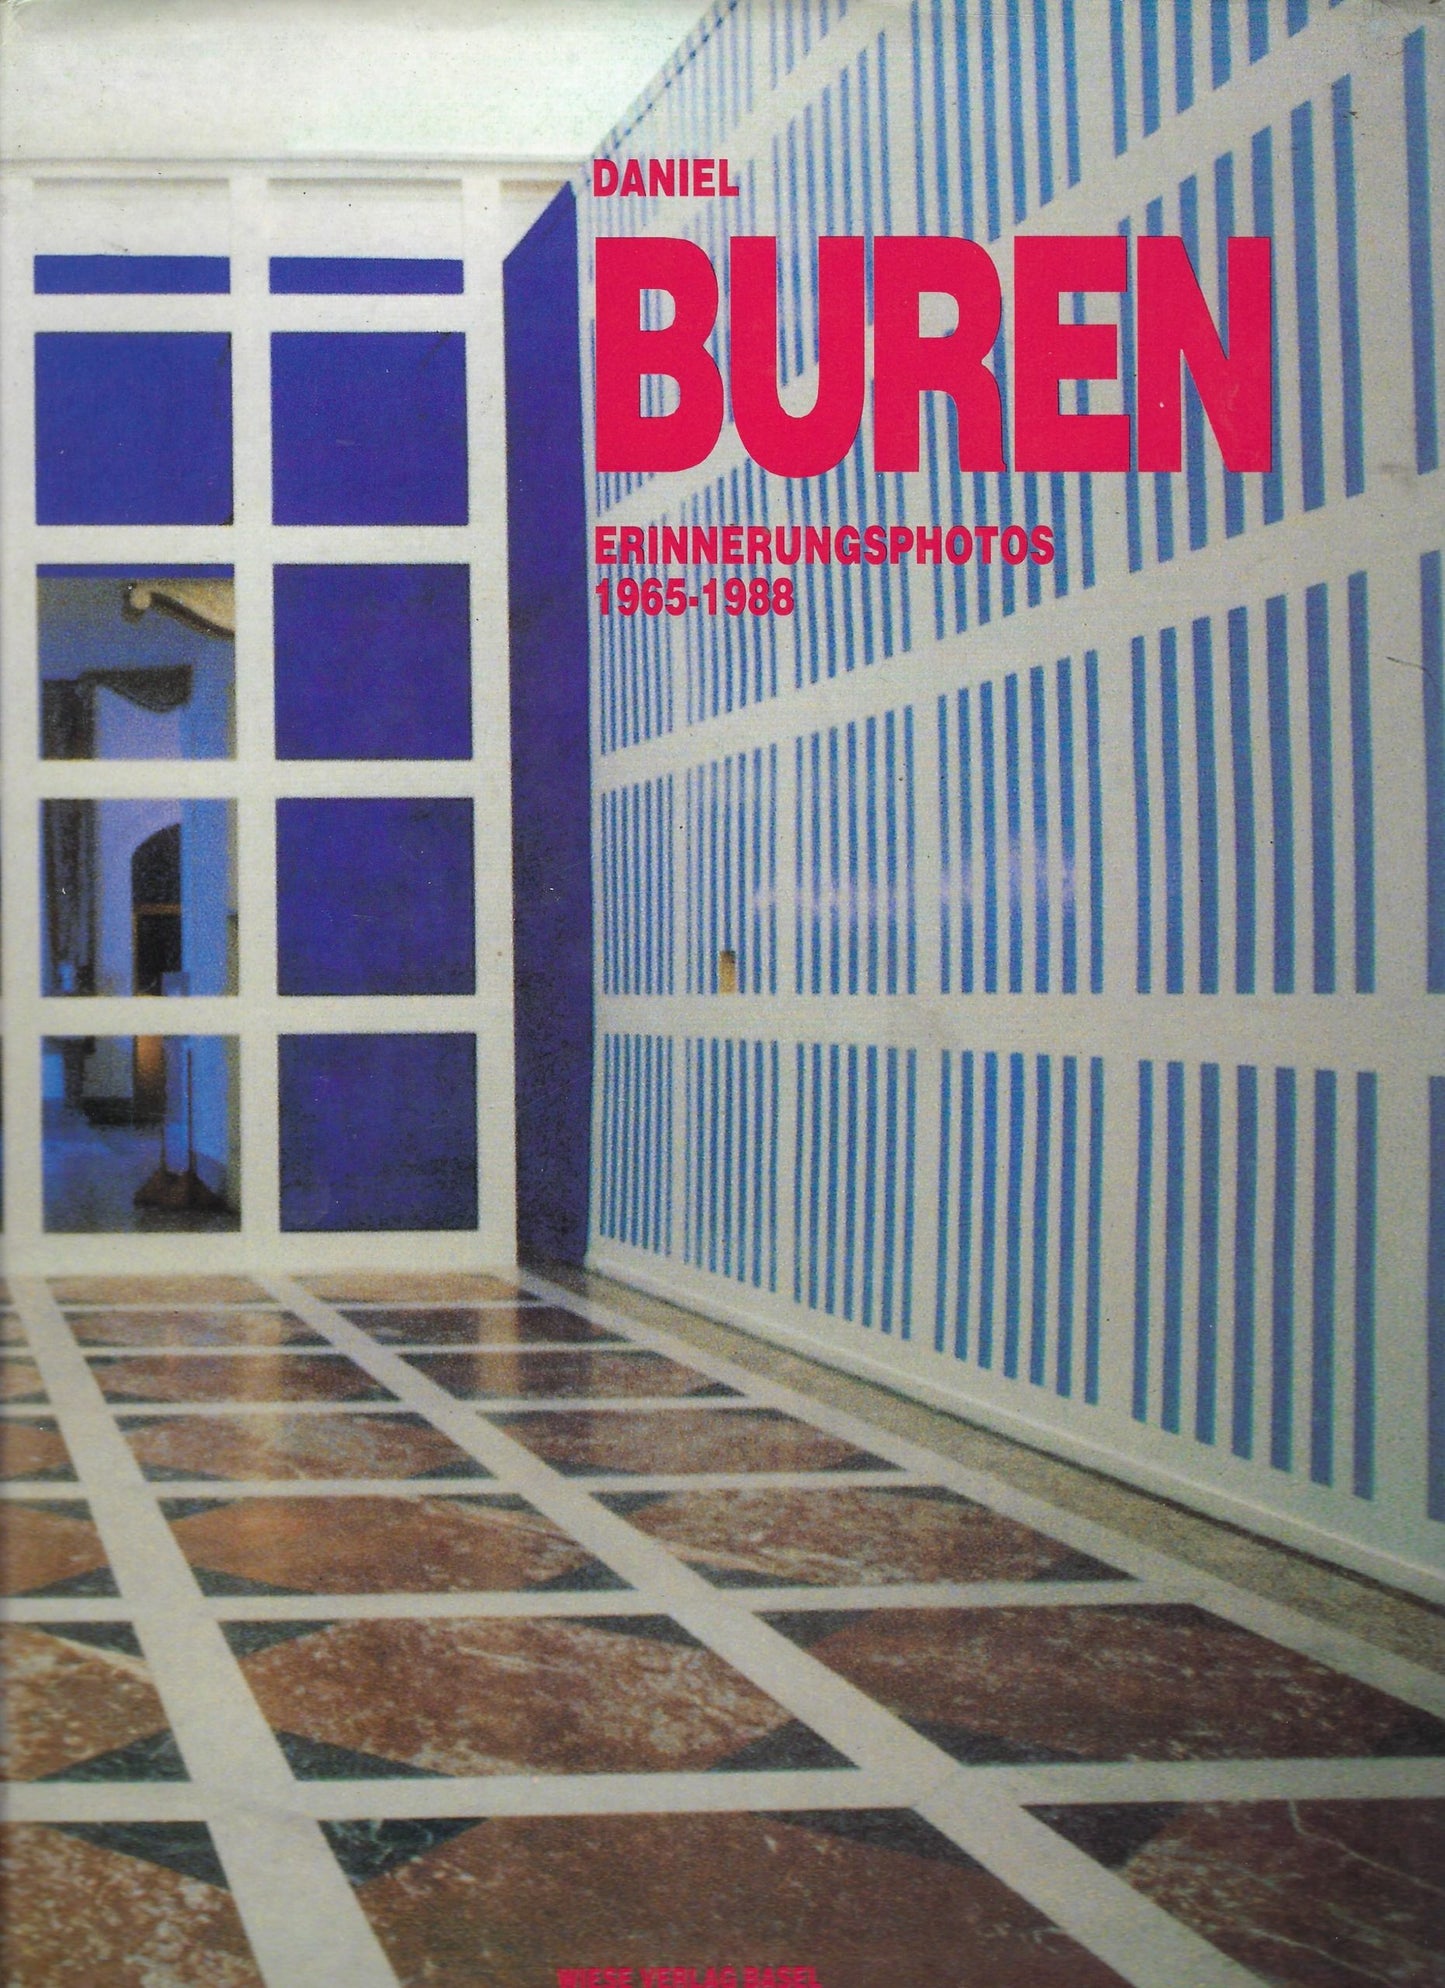 Daniel Buren erinnerungsphotos 1965-1988